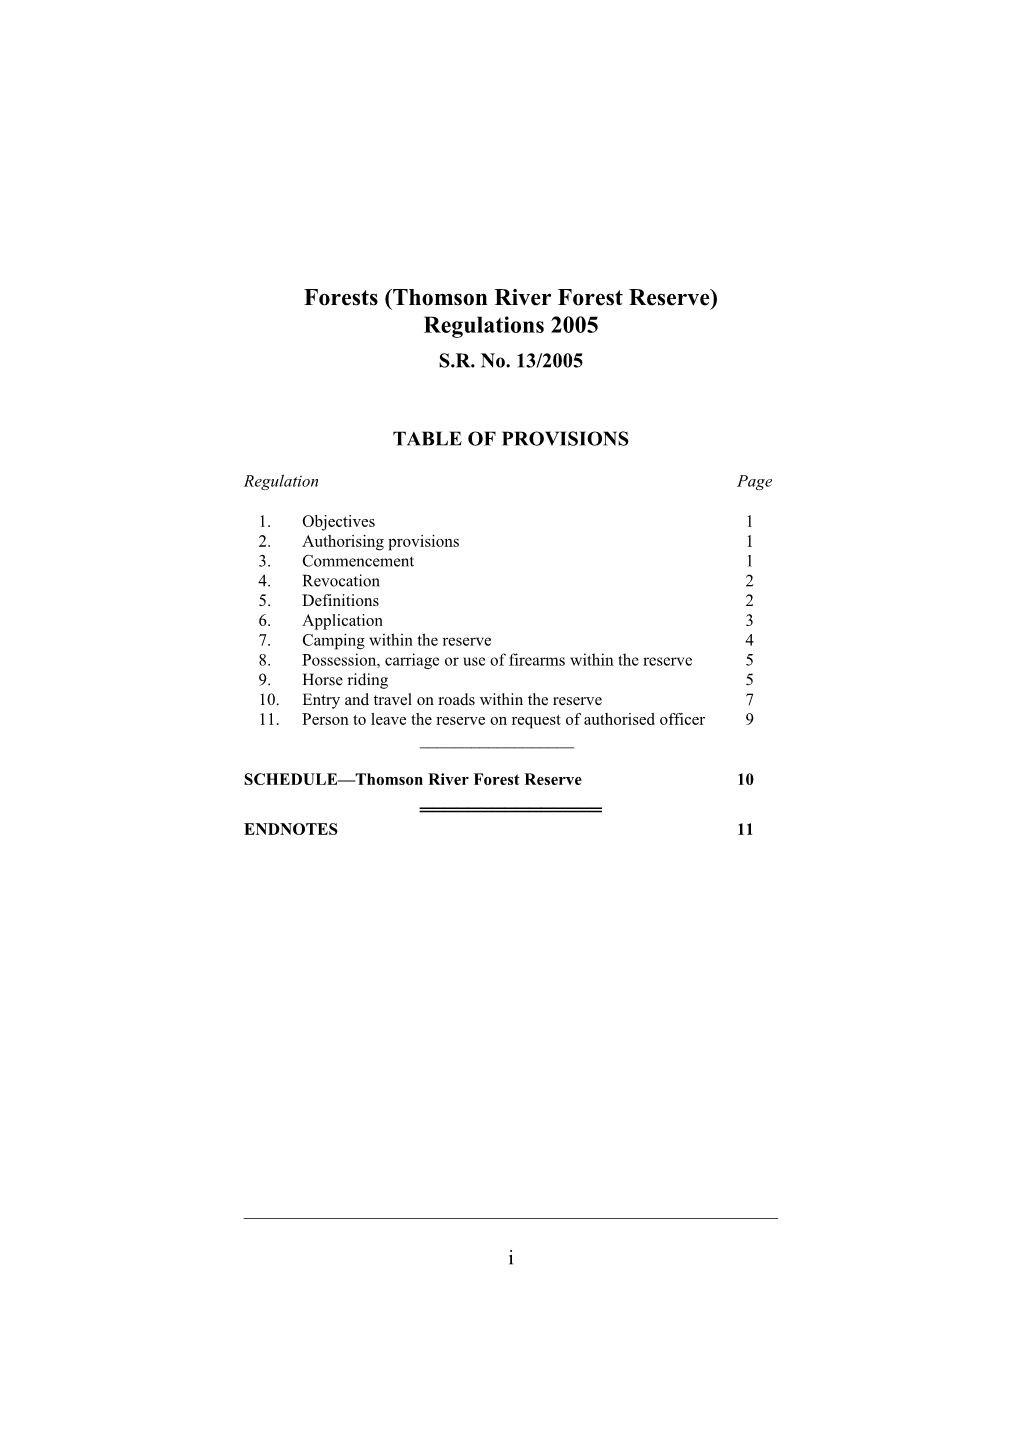 Forests (Thomson River Forest Reserve) Regulations 2005